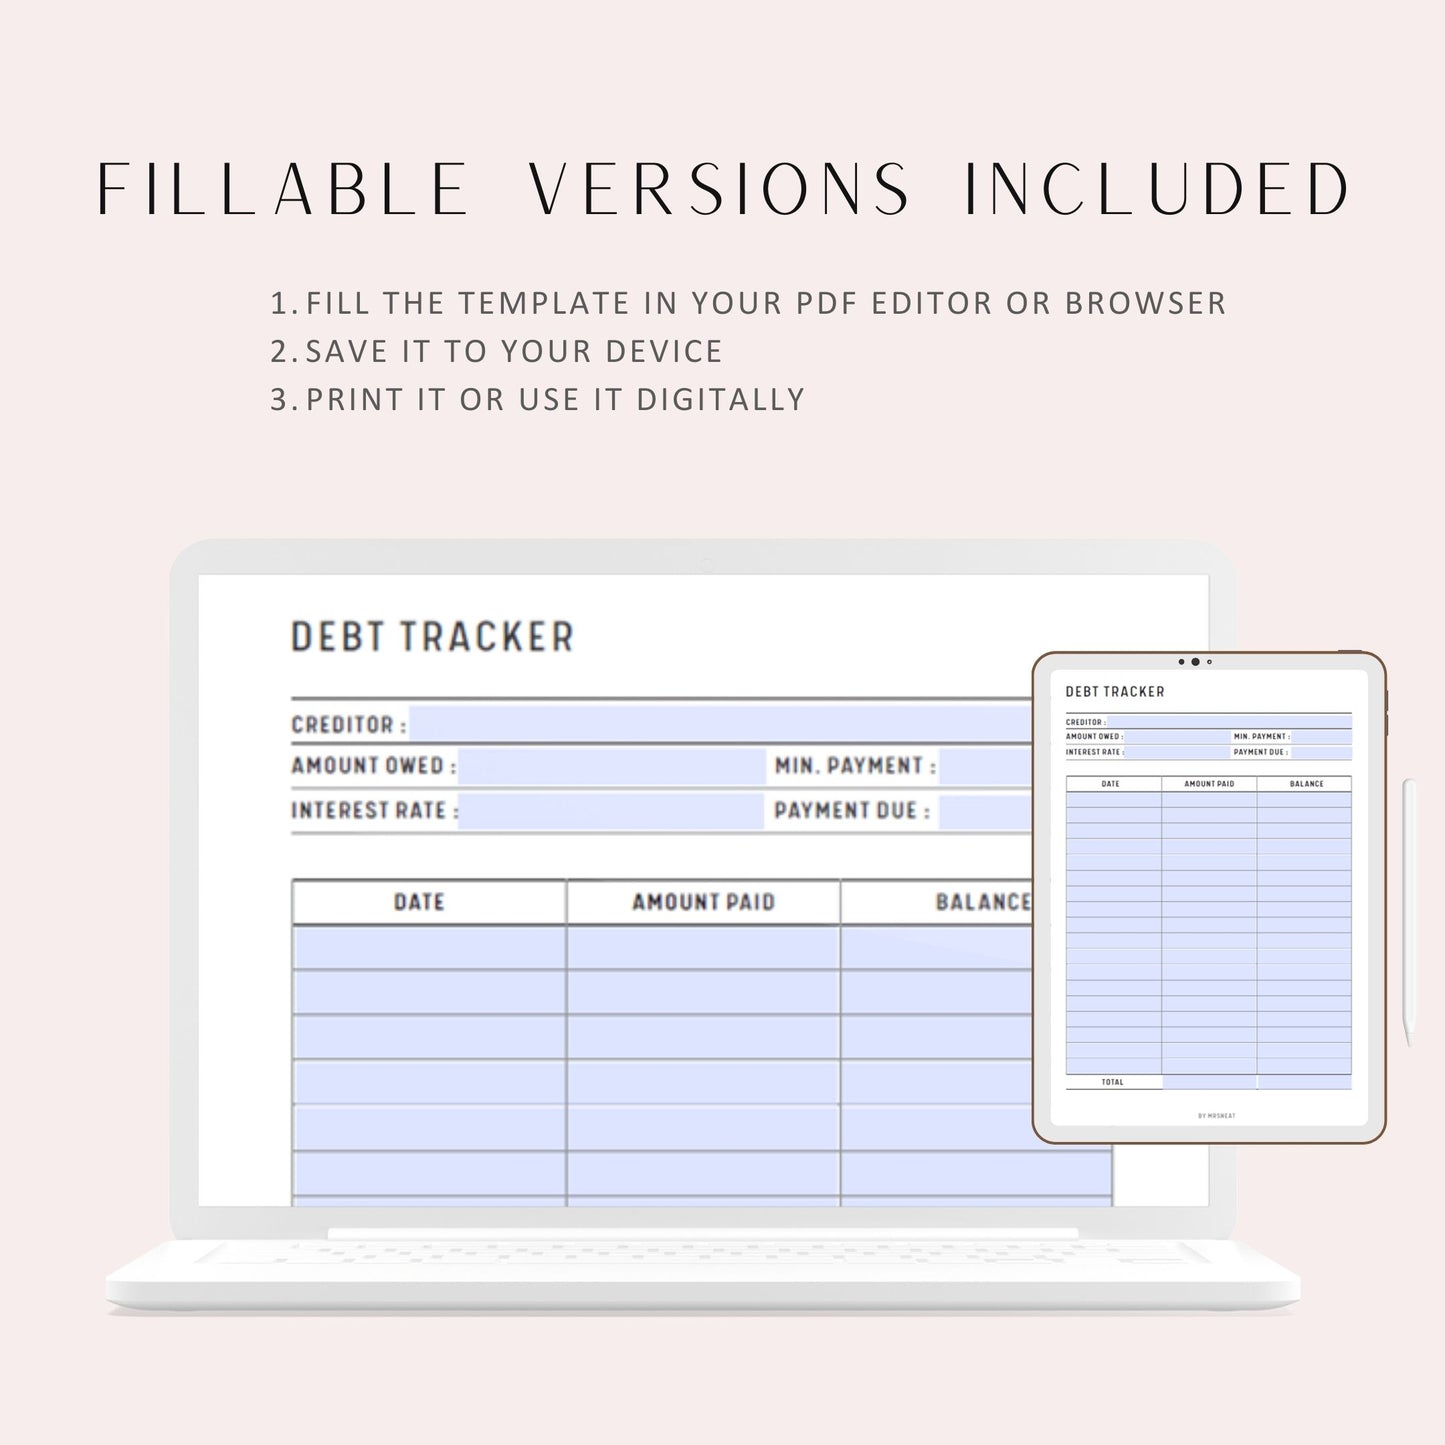 Debt Payment Tracker Template Printable Planner, Fillable PDF, A4, A5, Letter, Half Letter, Digital Planner